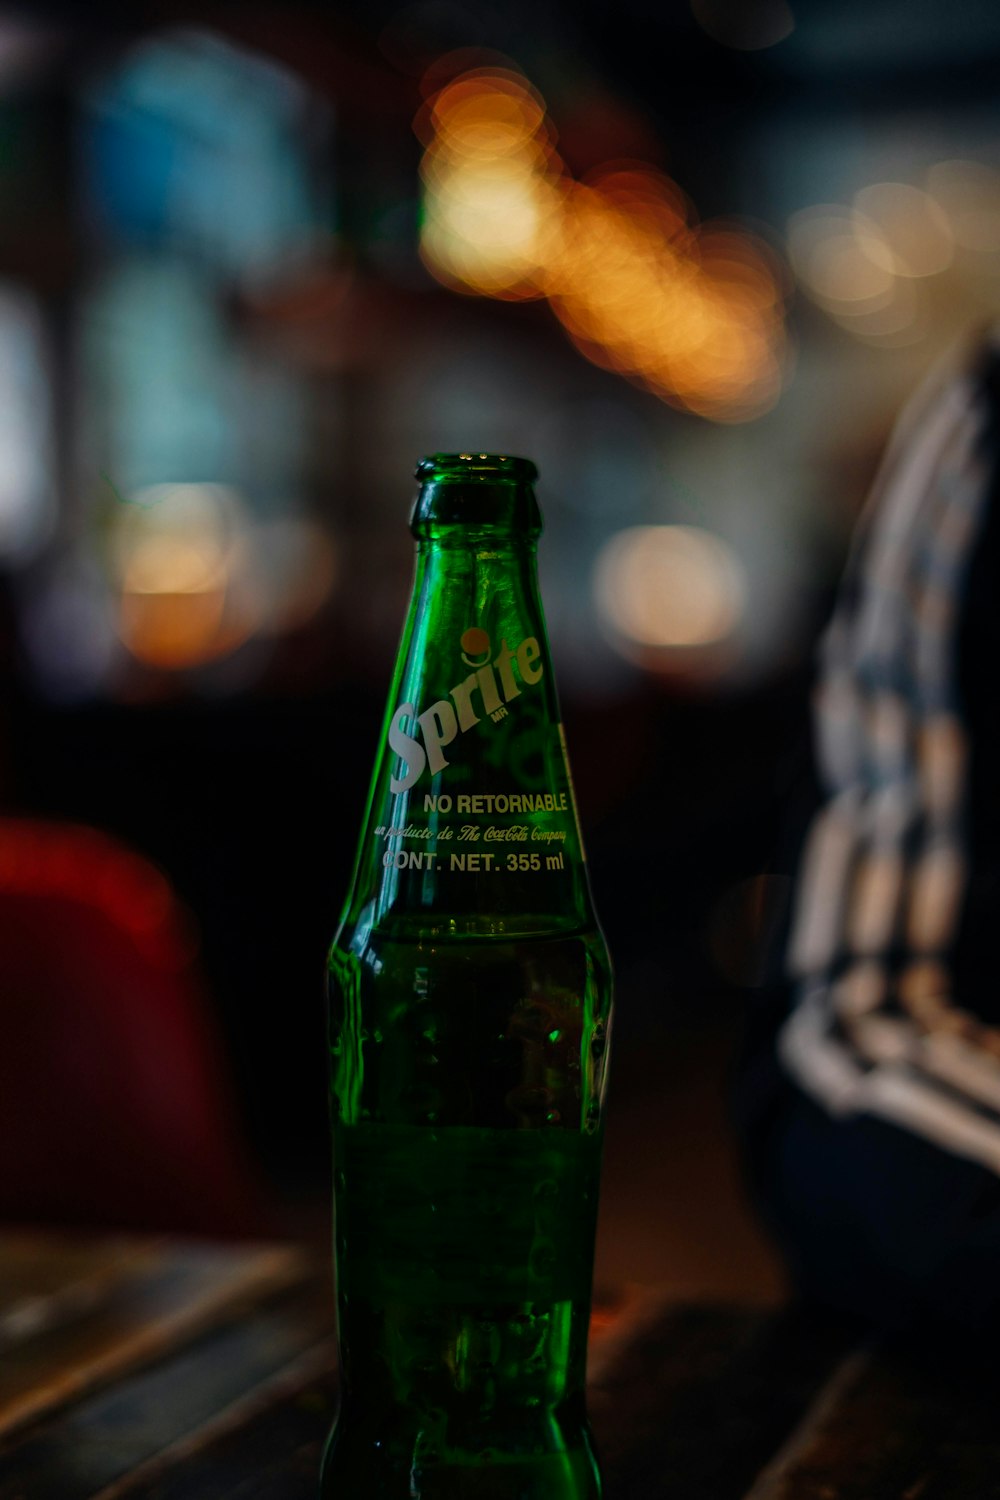 green sprite bottle in bokeh photography